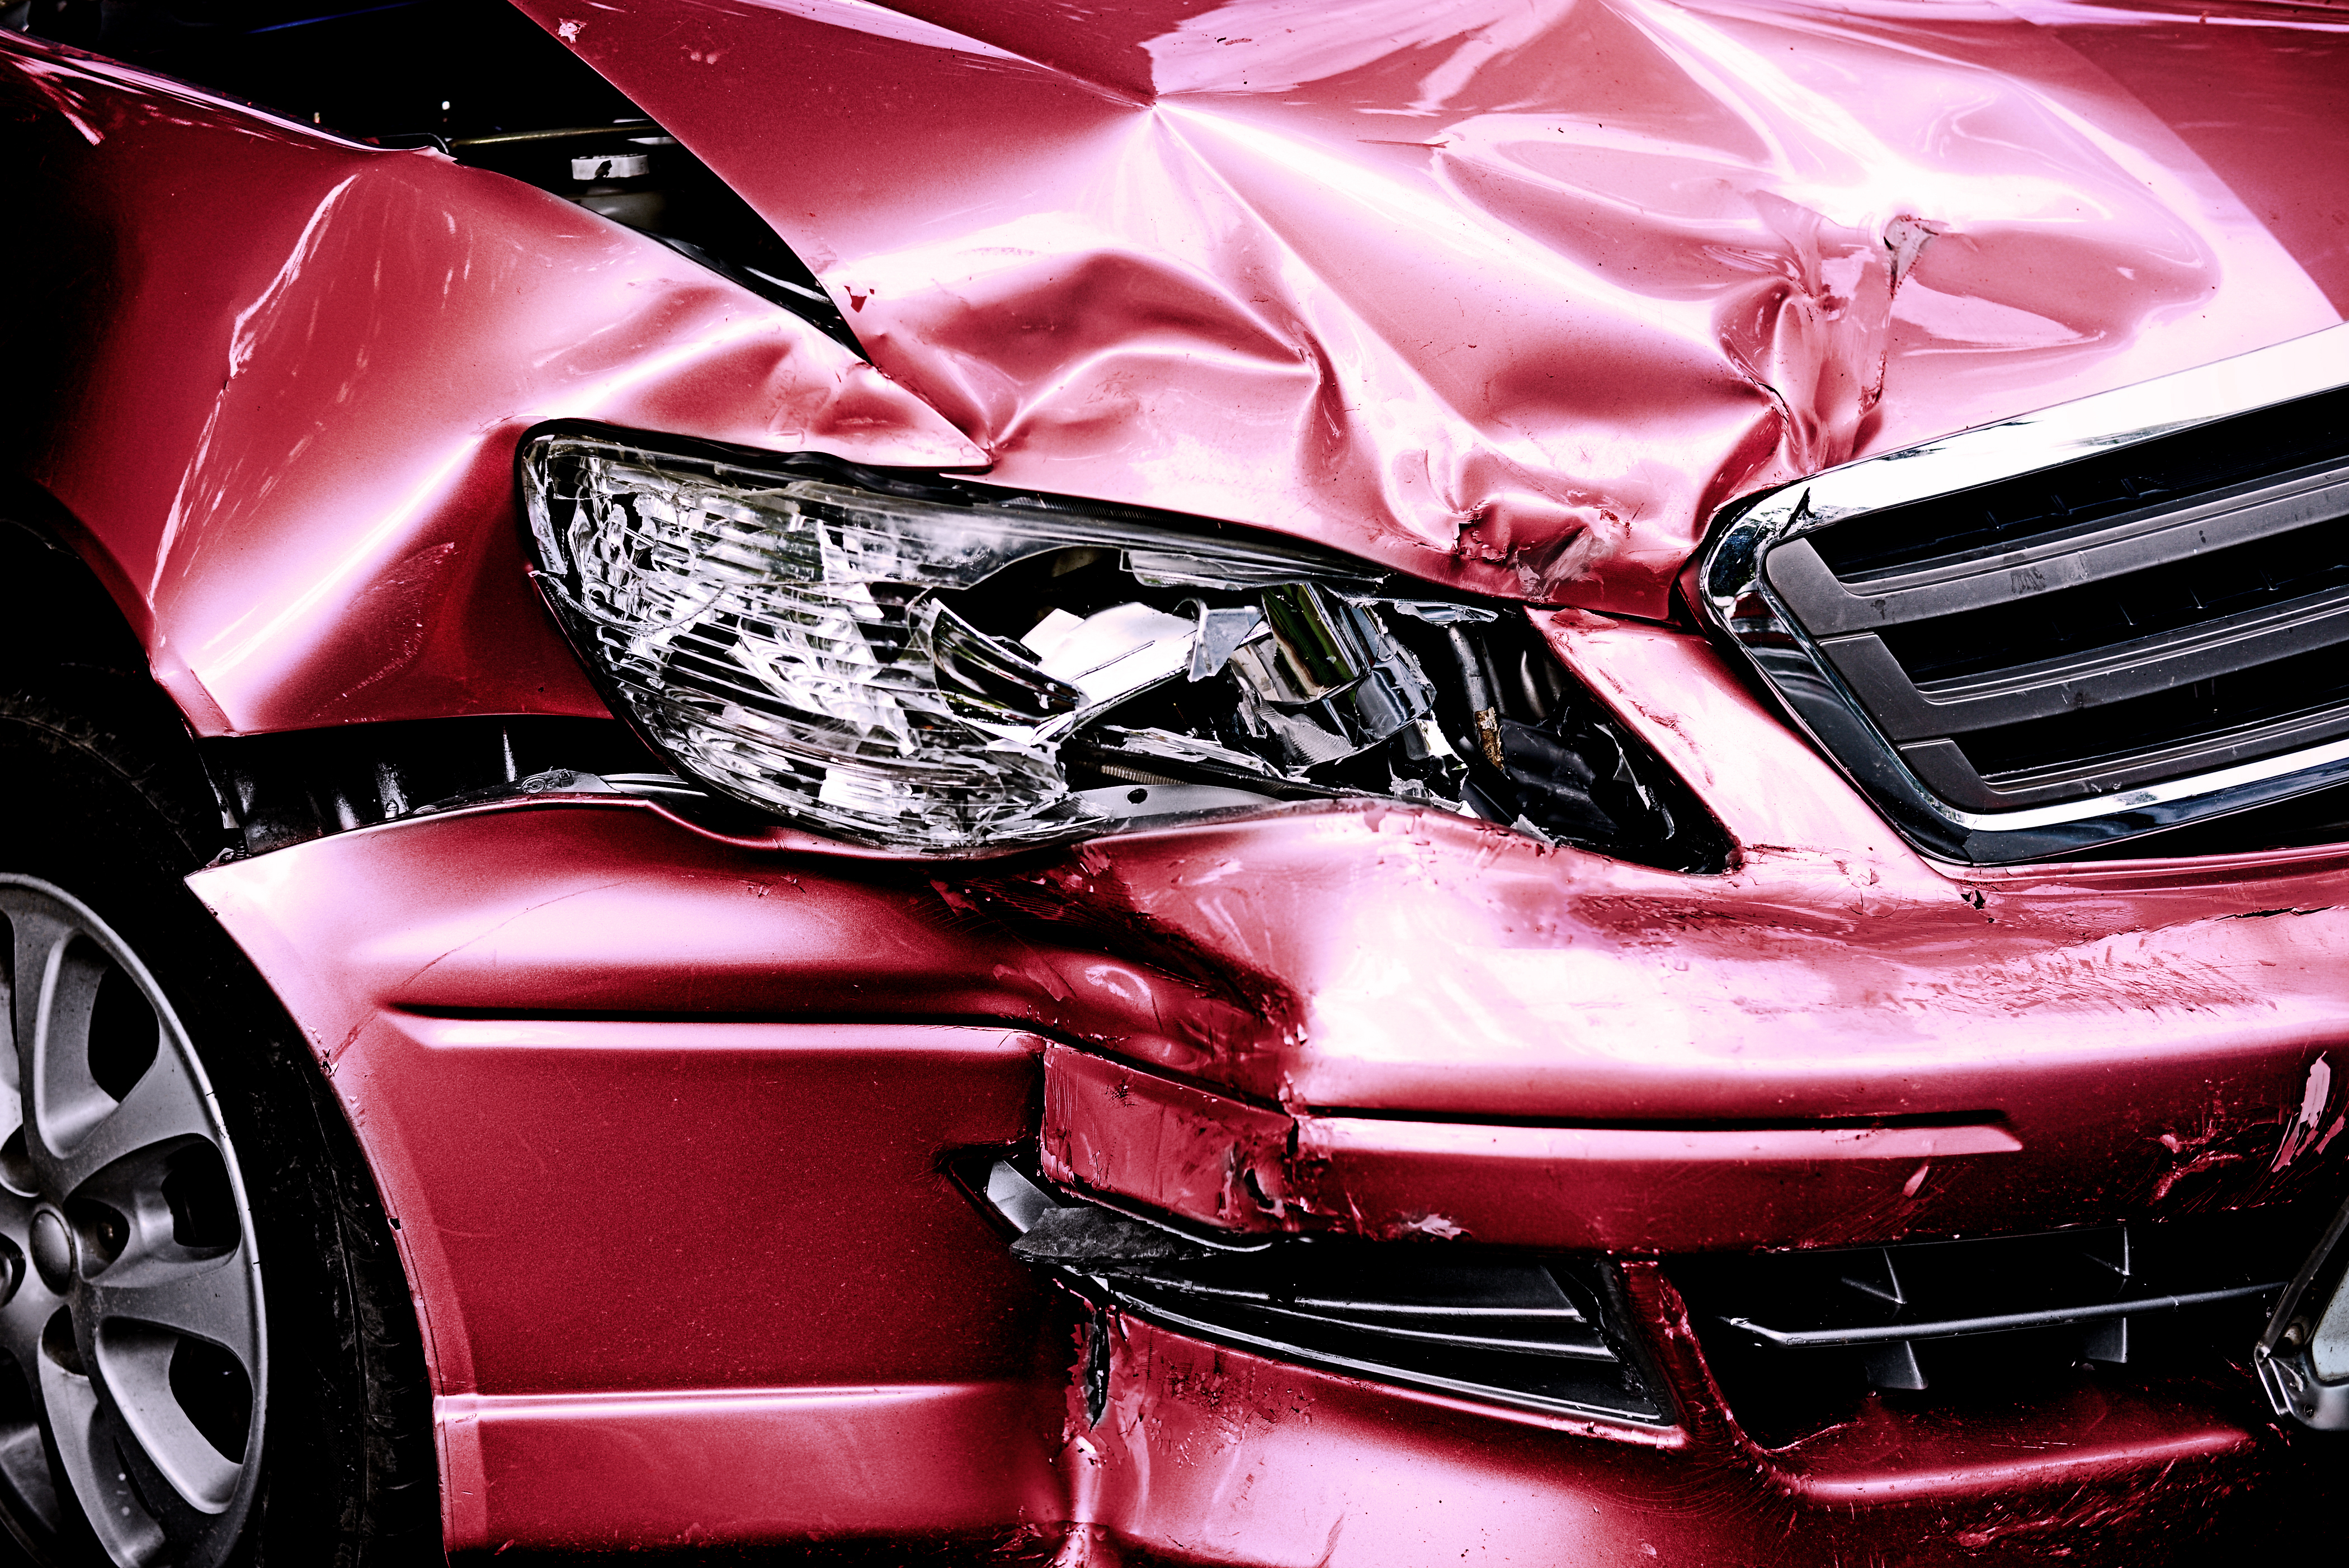 Red car after crashing | Source: Shutterstock.com